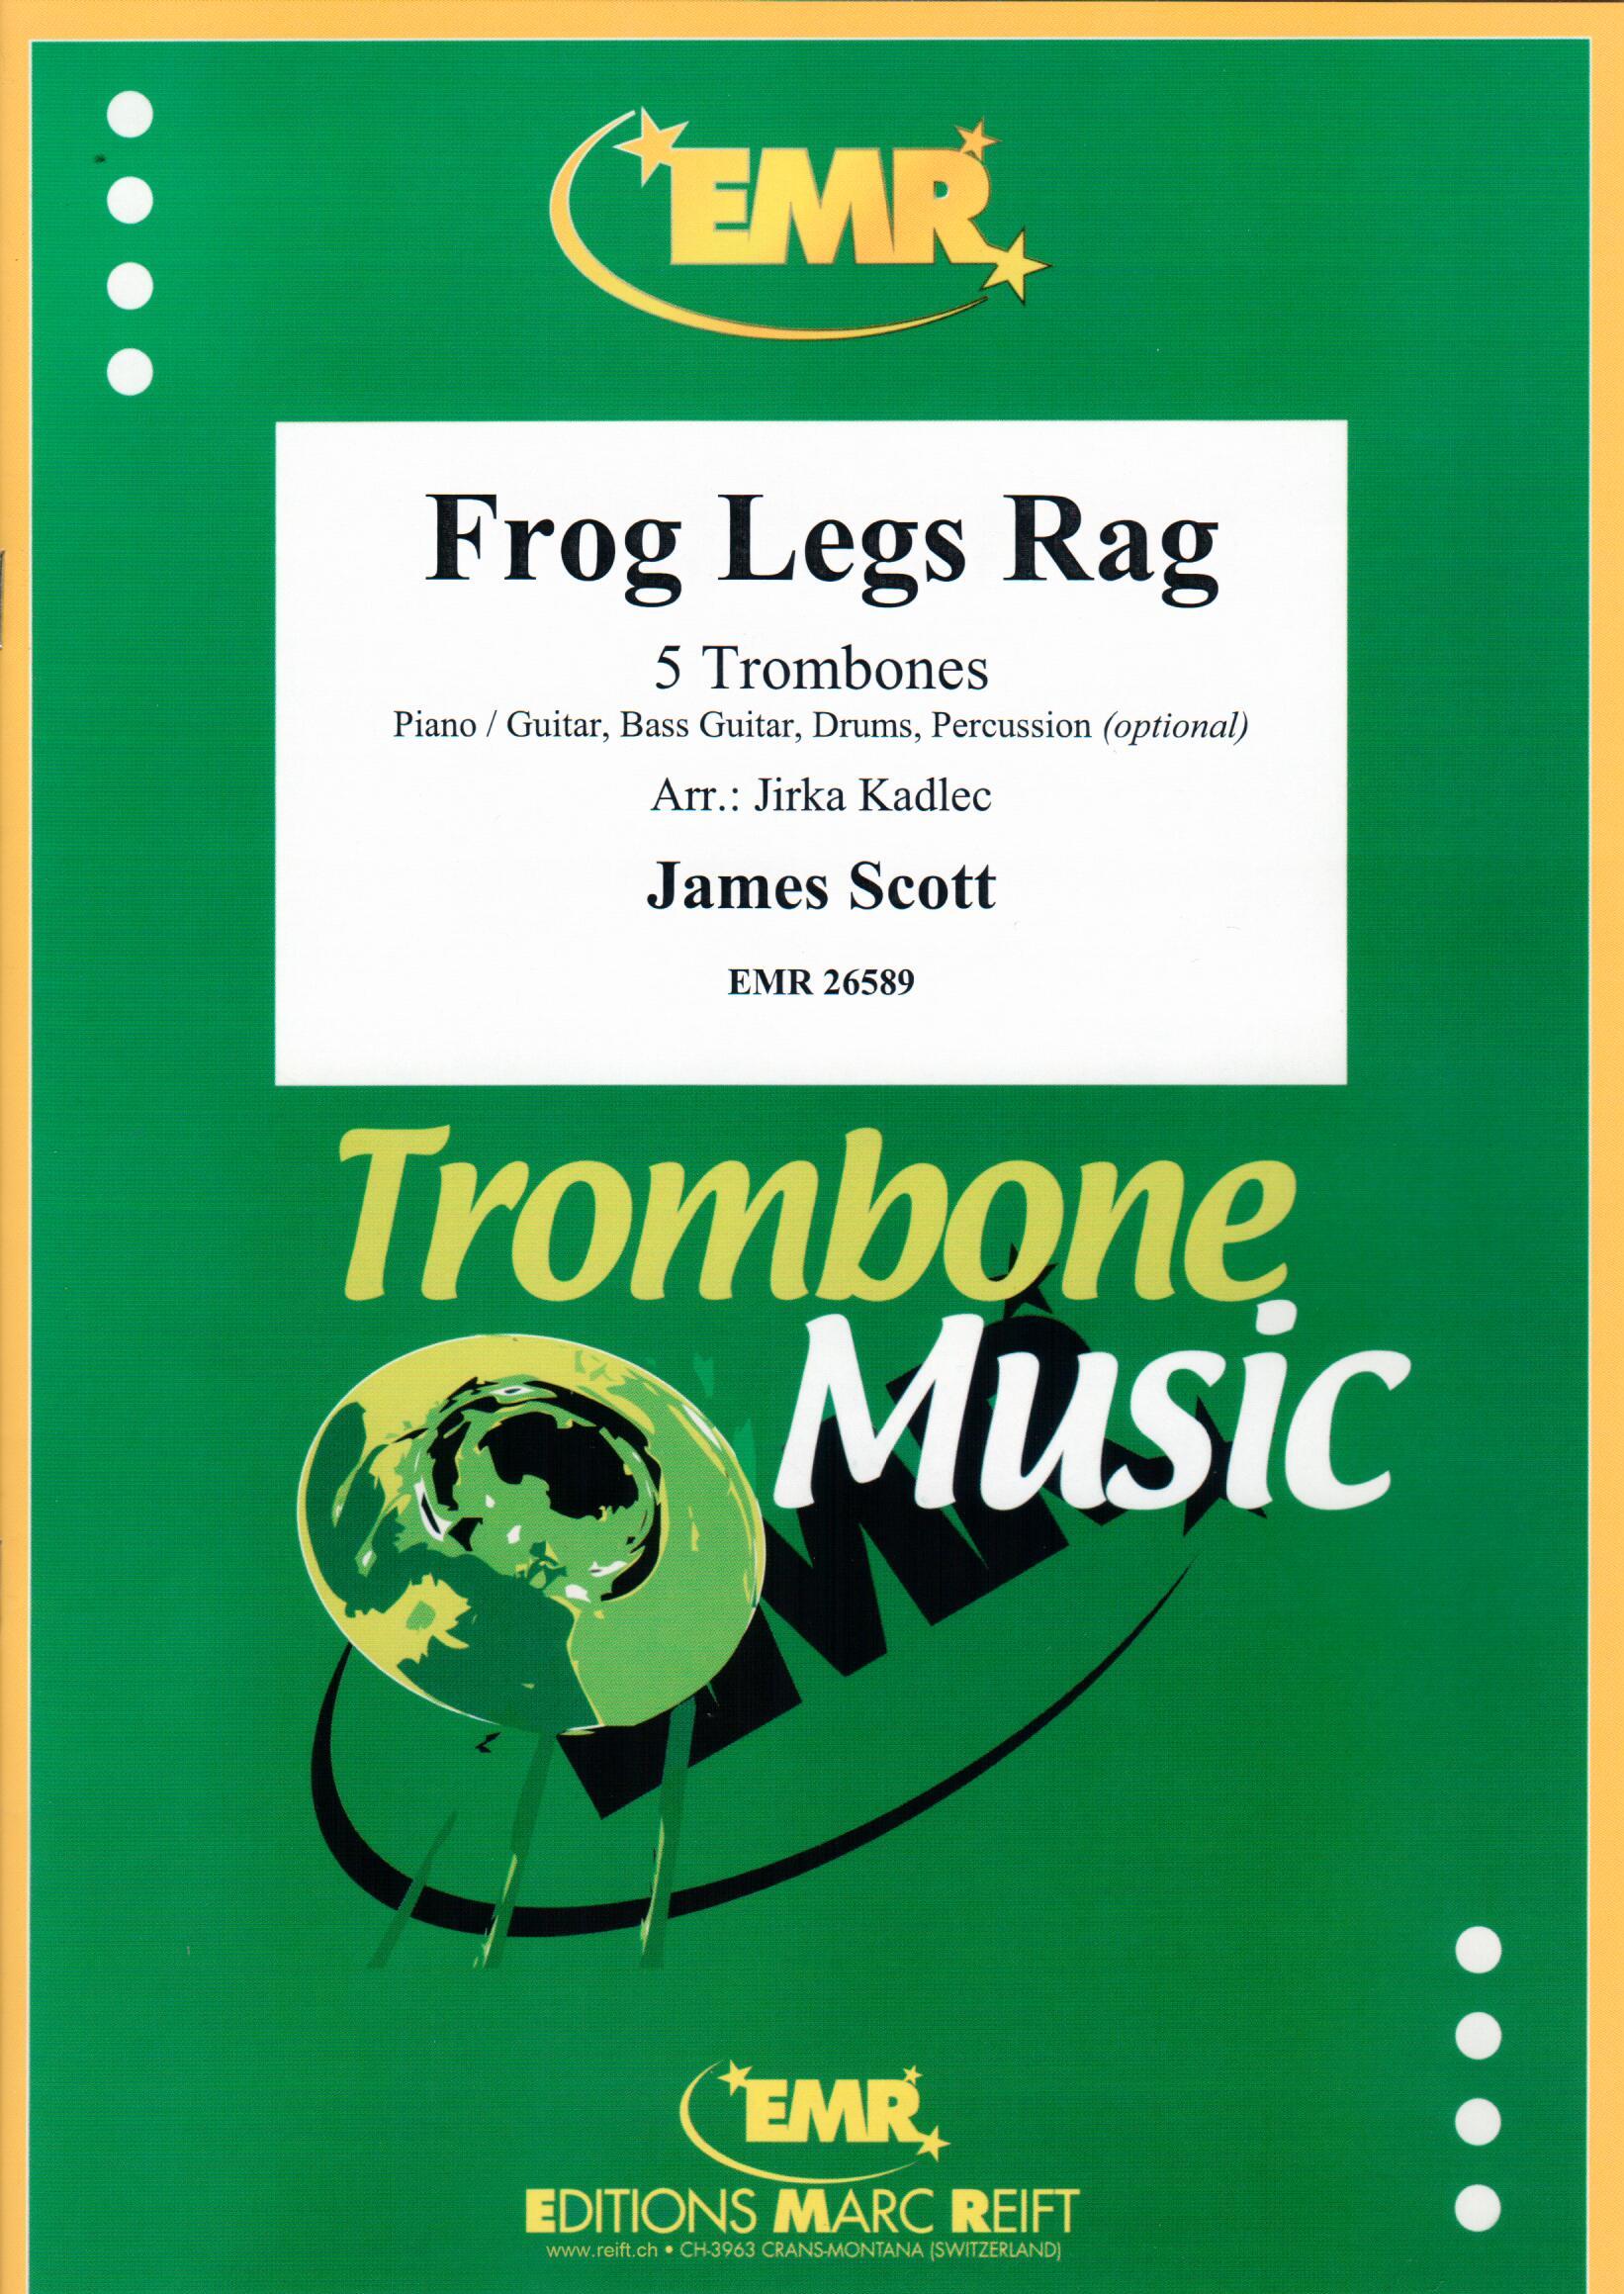 FROG LEGS RAG, SOLOS - Trombone